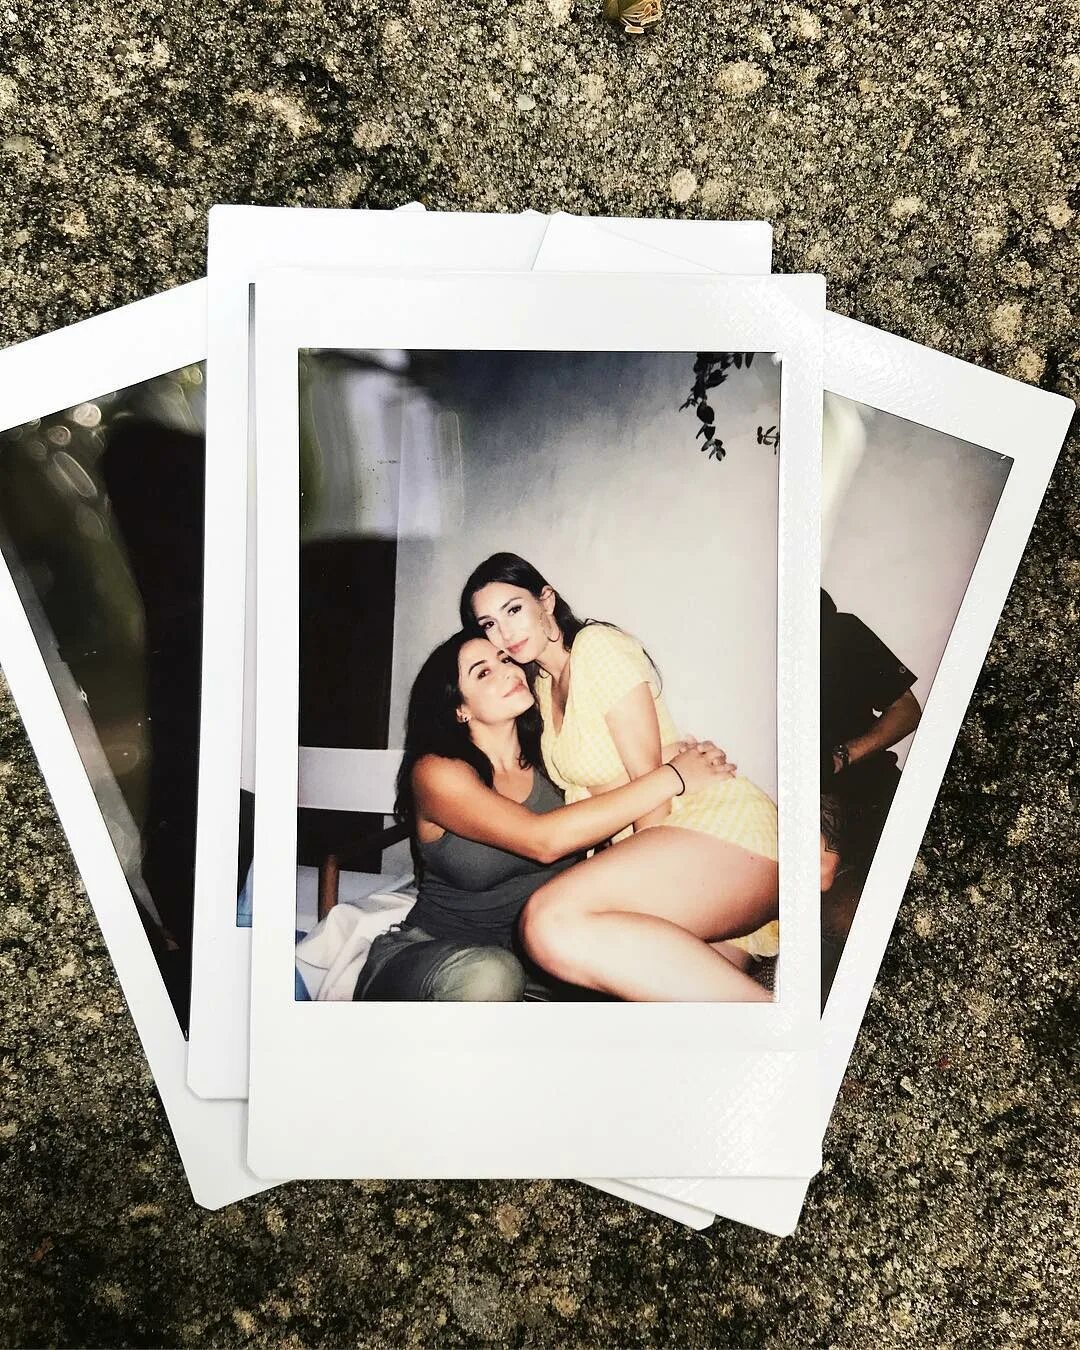 ASTRID LOCH on Instagram: “Salma & Penelope (coming to a tv near yo...